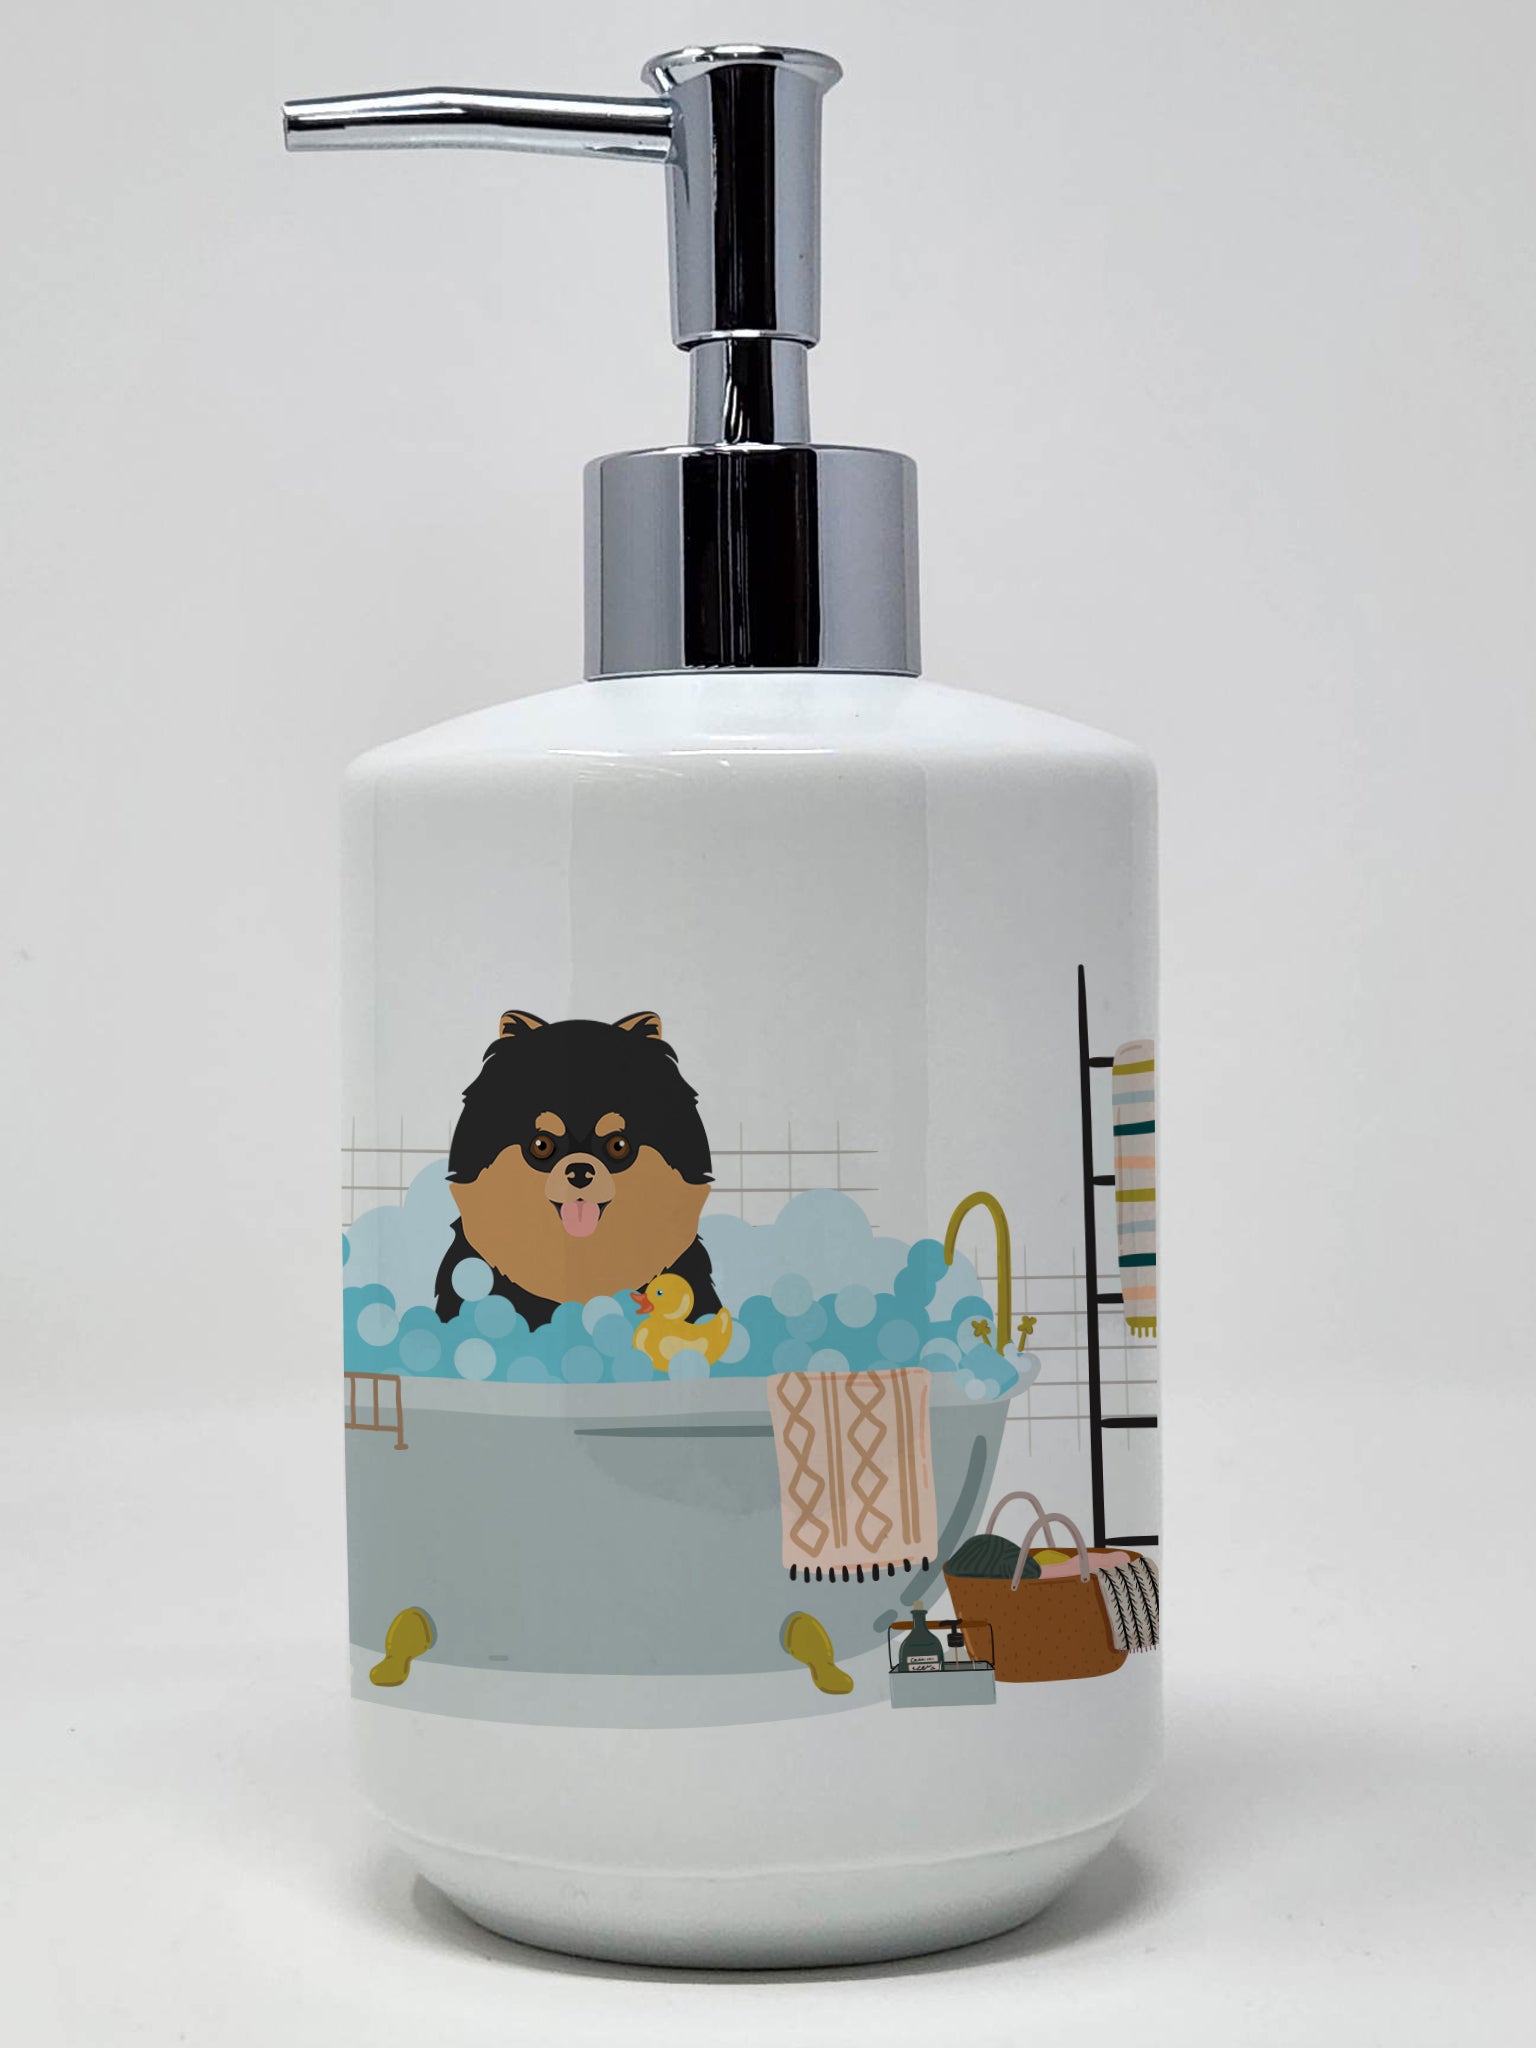 Buy this Black and Tan Pomeranian Ceramic Soap Dispenser